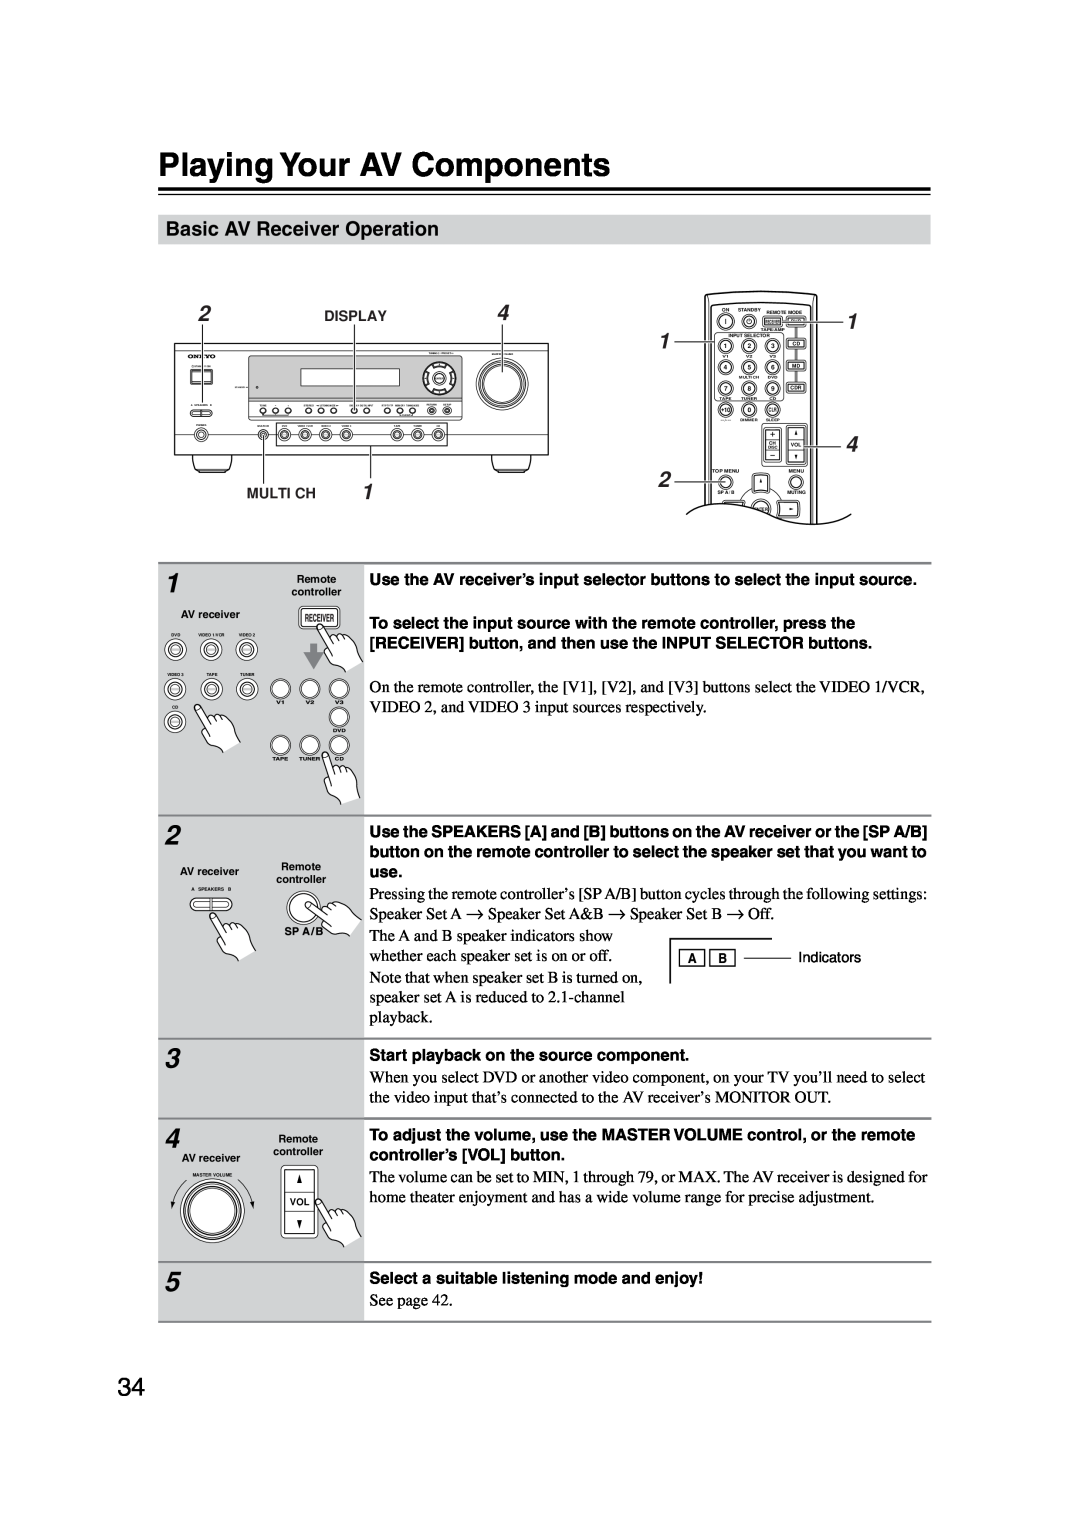 Onkyo TX-SR303E instruction manual Playing Your AV Components, Basic AV Receiver Operation 